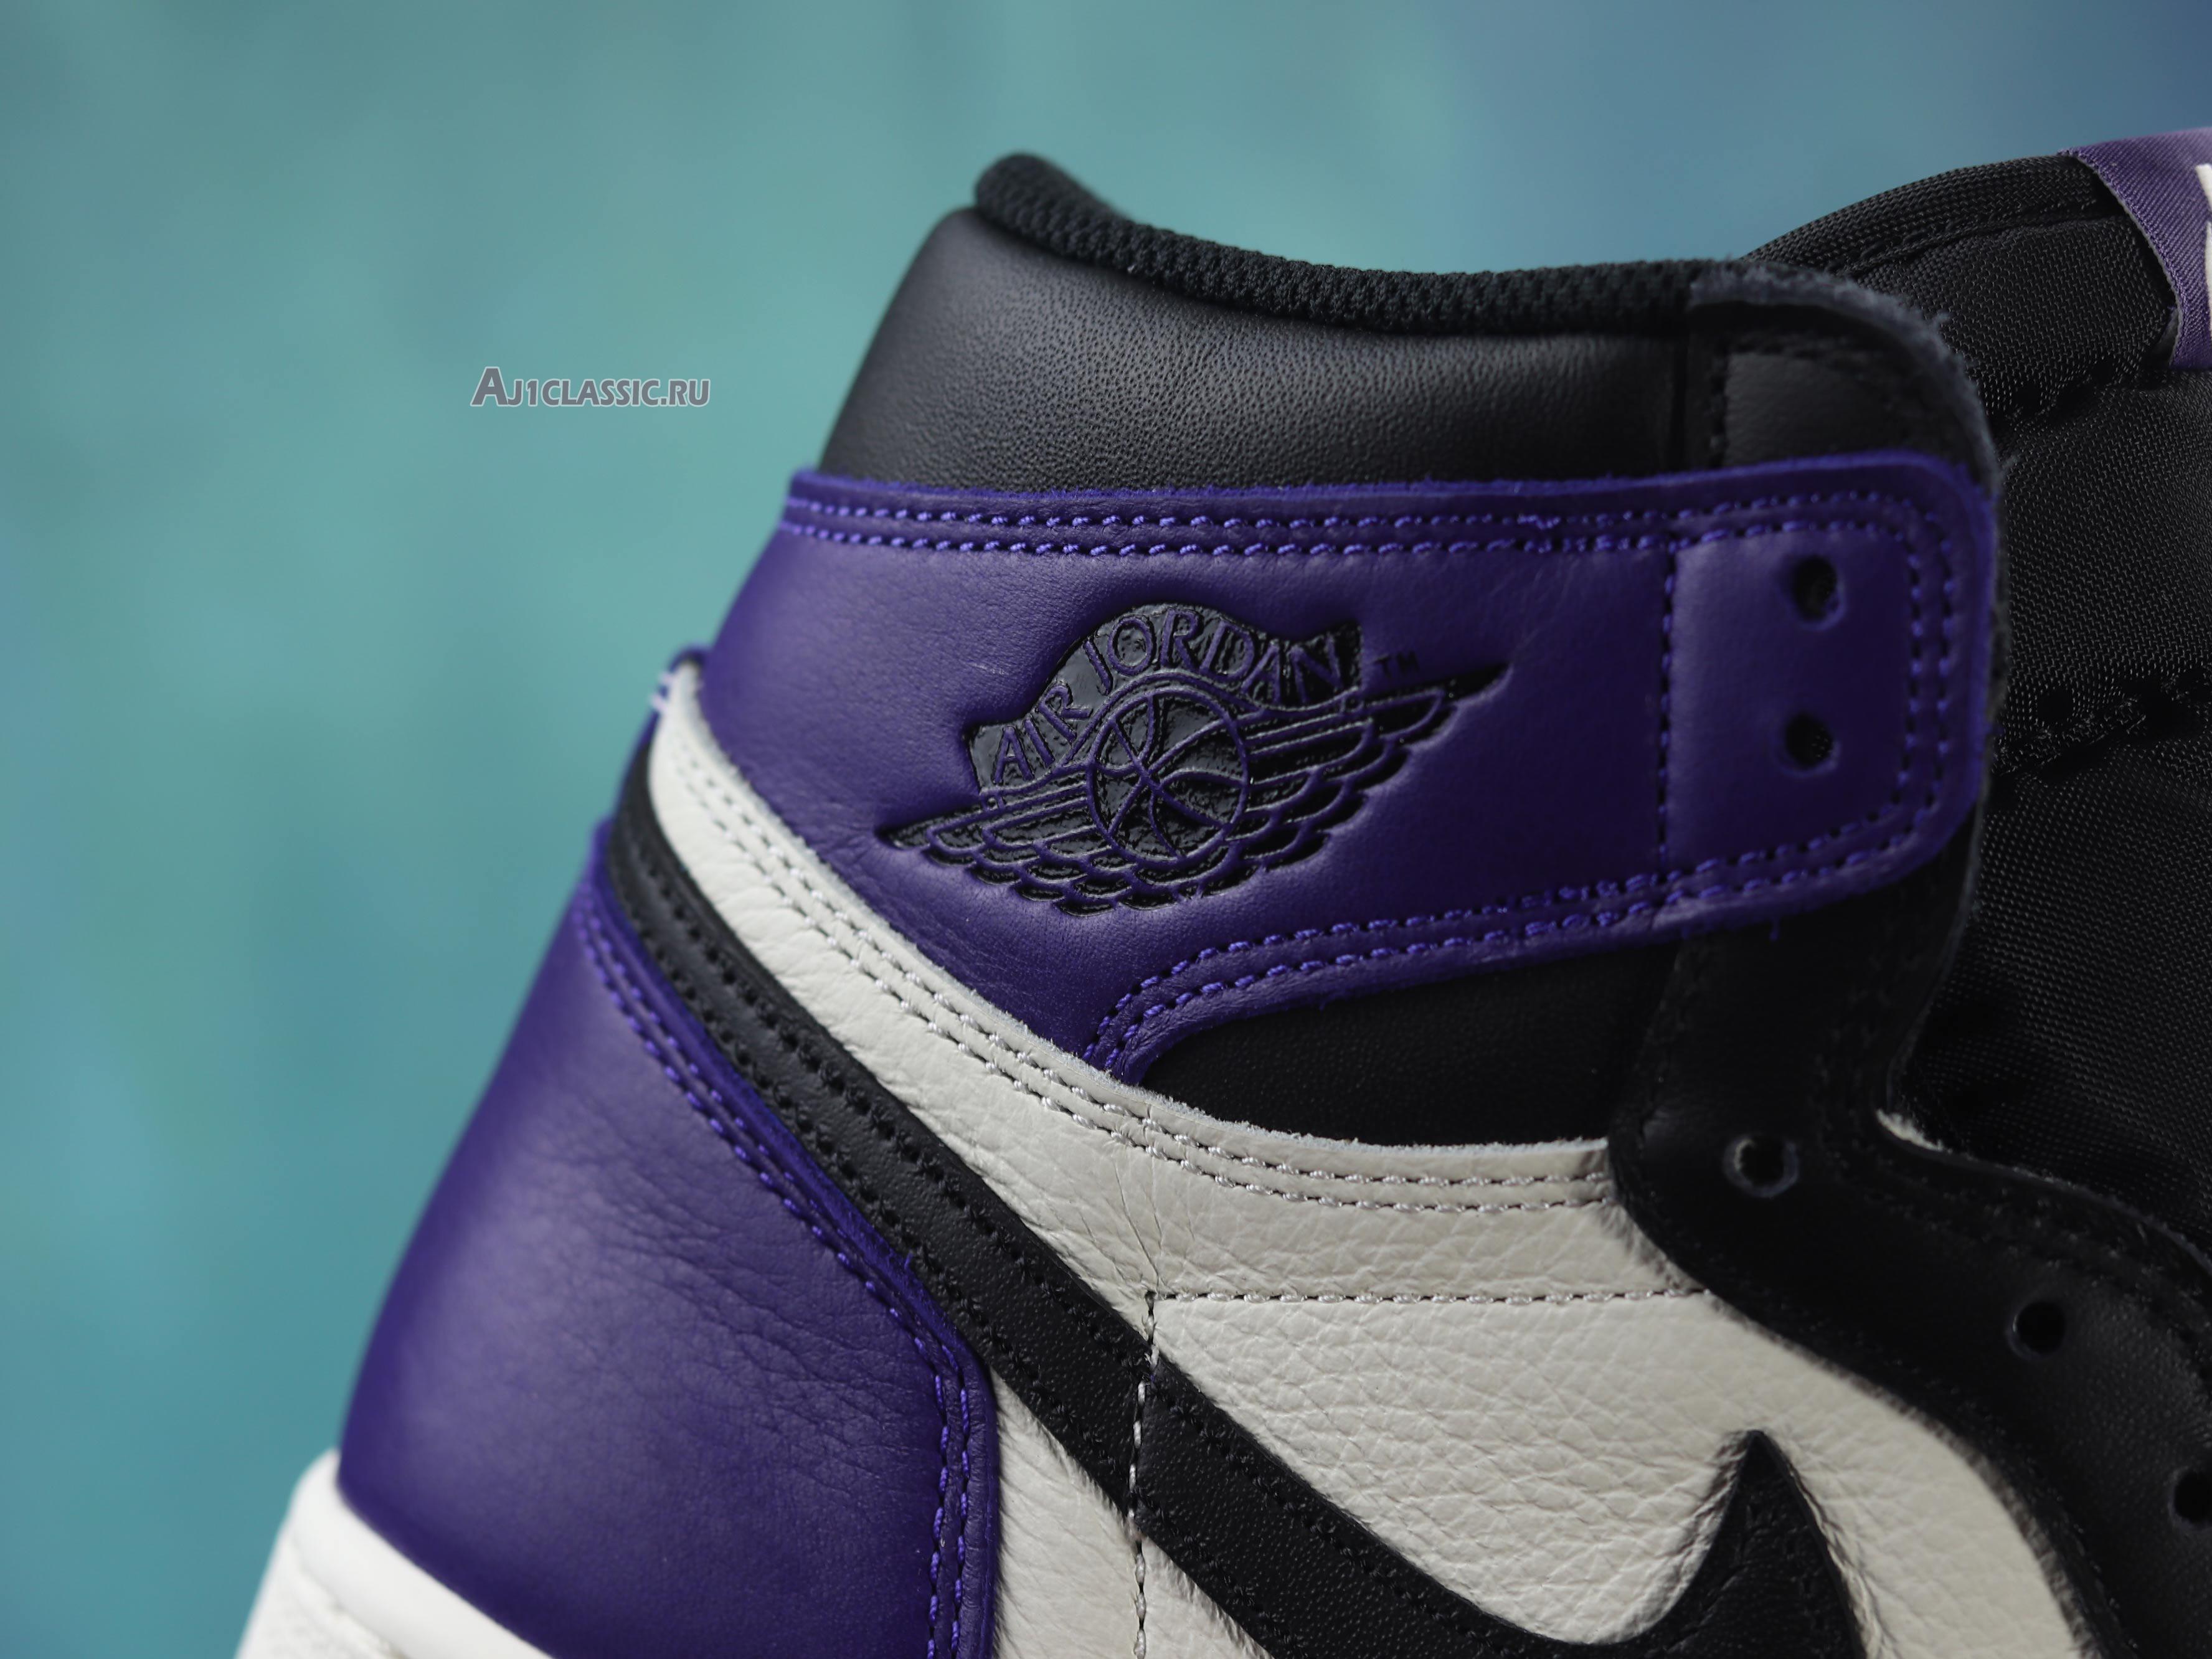 Air Jordan 1 Retro High OG "Court Purple" 555088-501-02